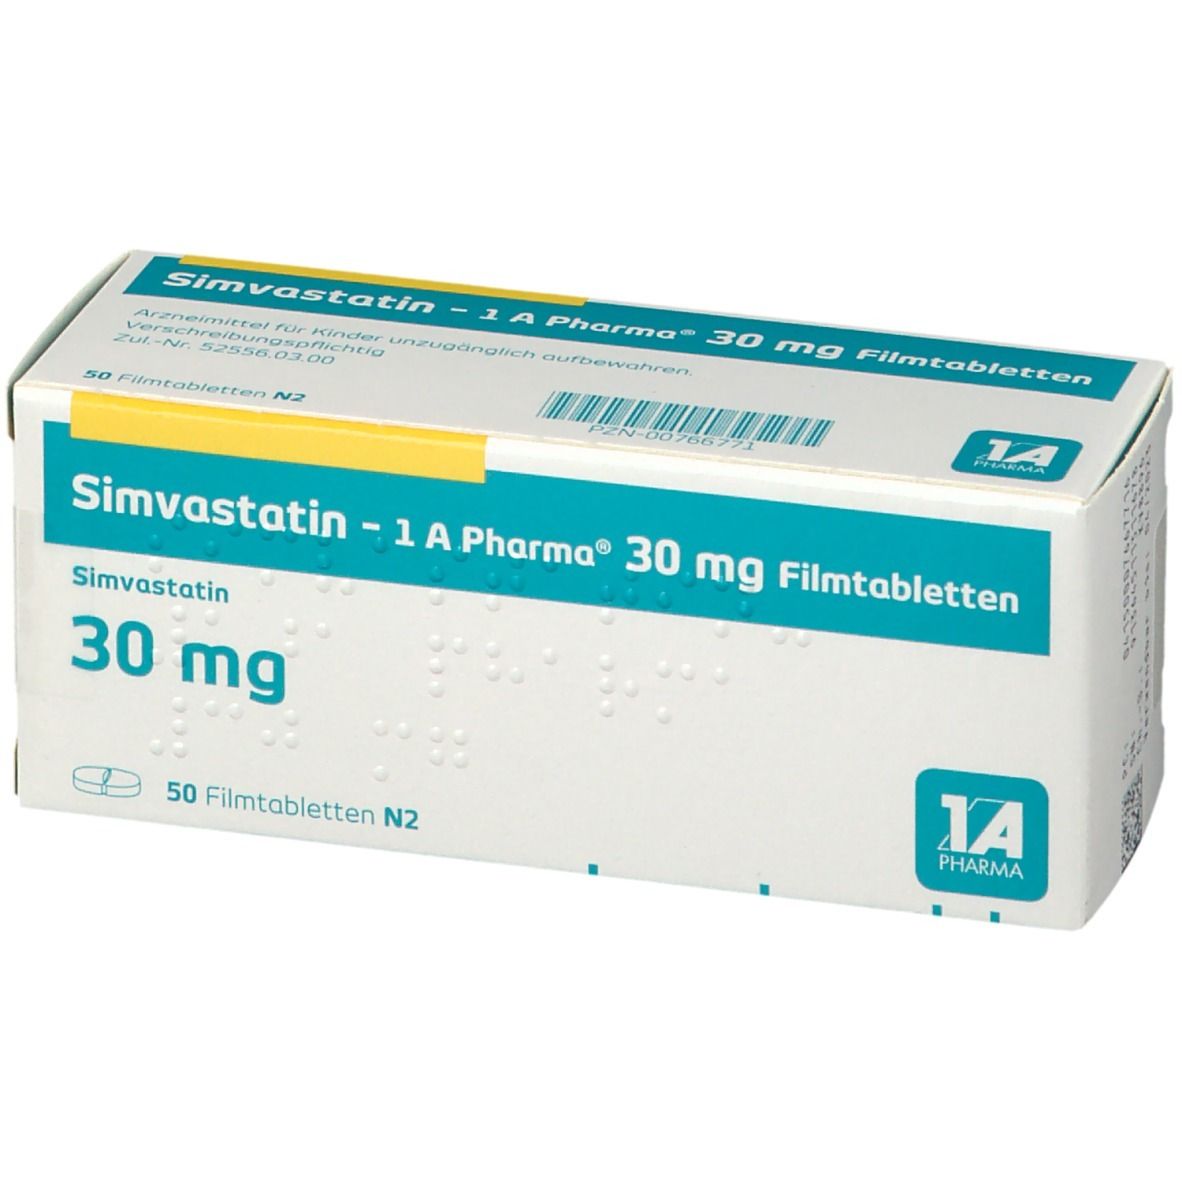 Simvastatin - 1 A Pharma® 30 mg